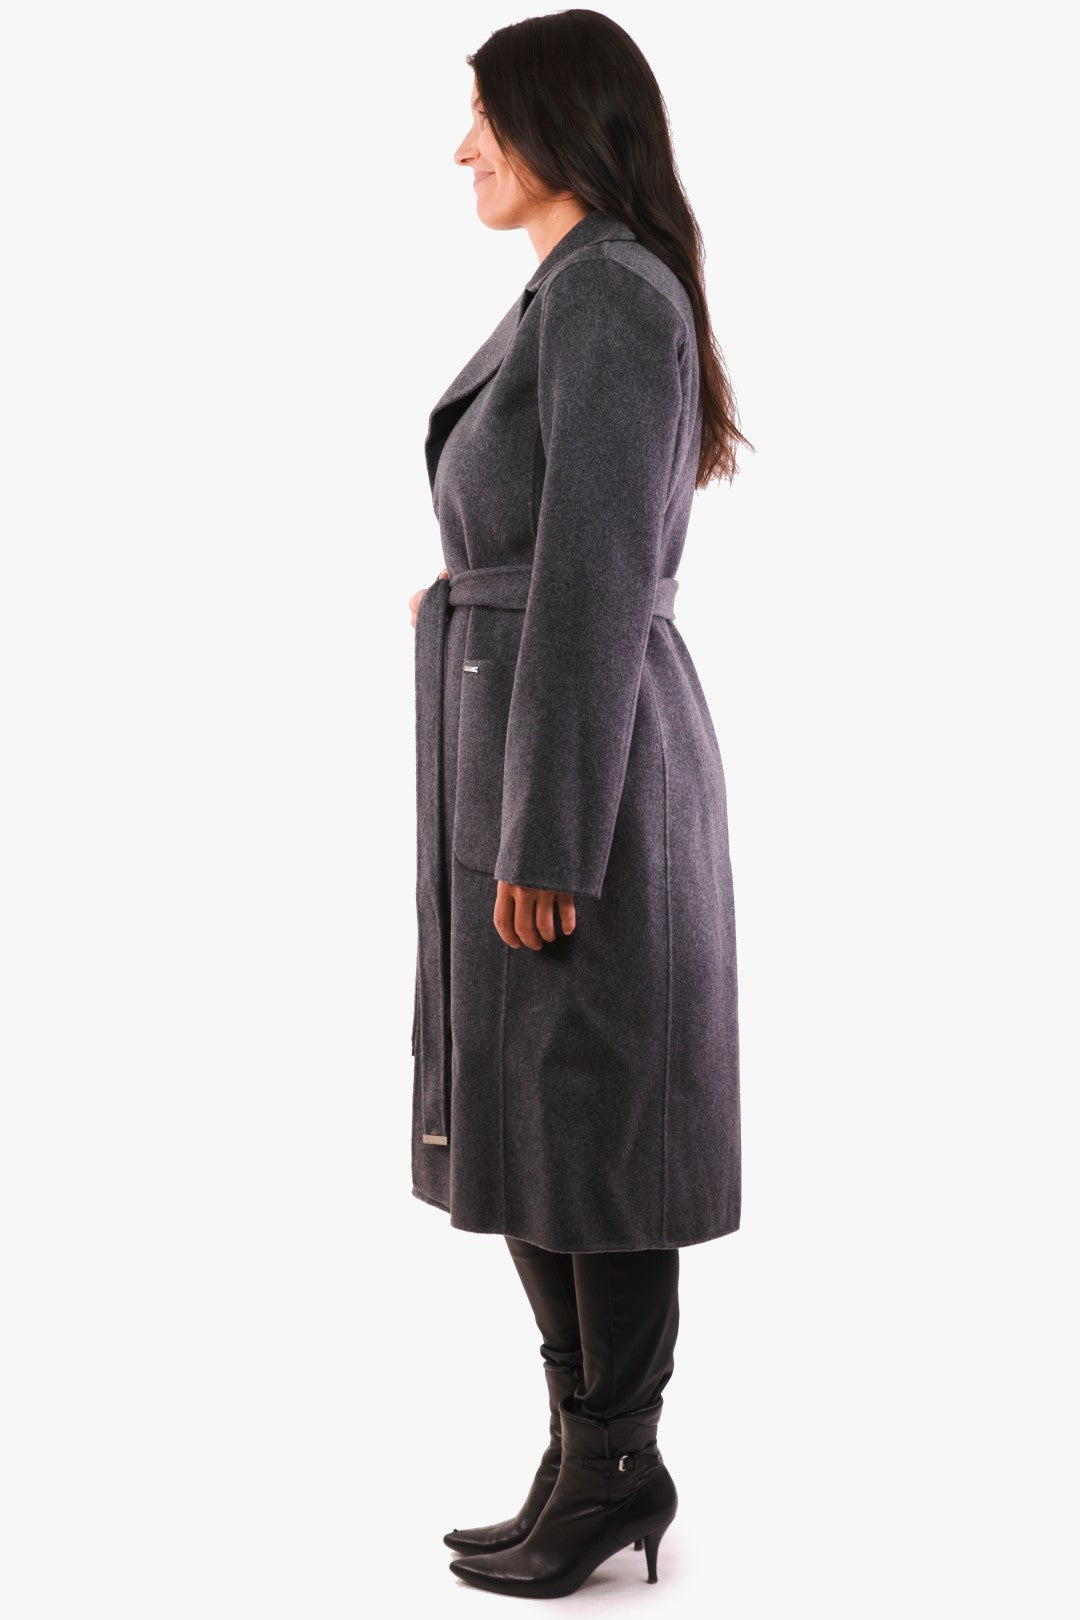 Gray Michael Kors coat